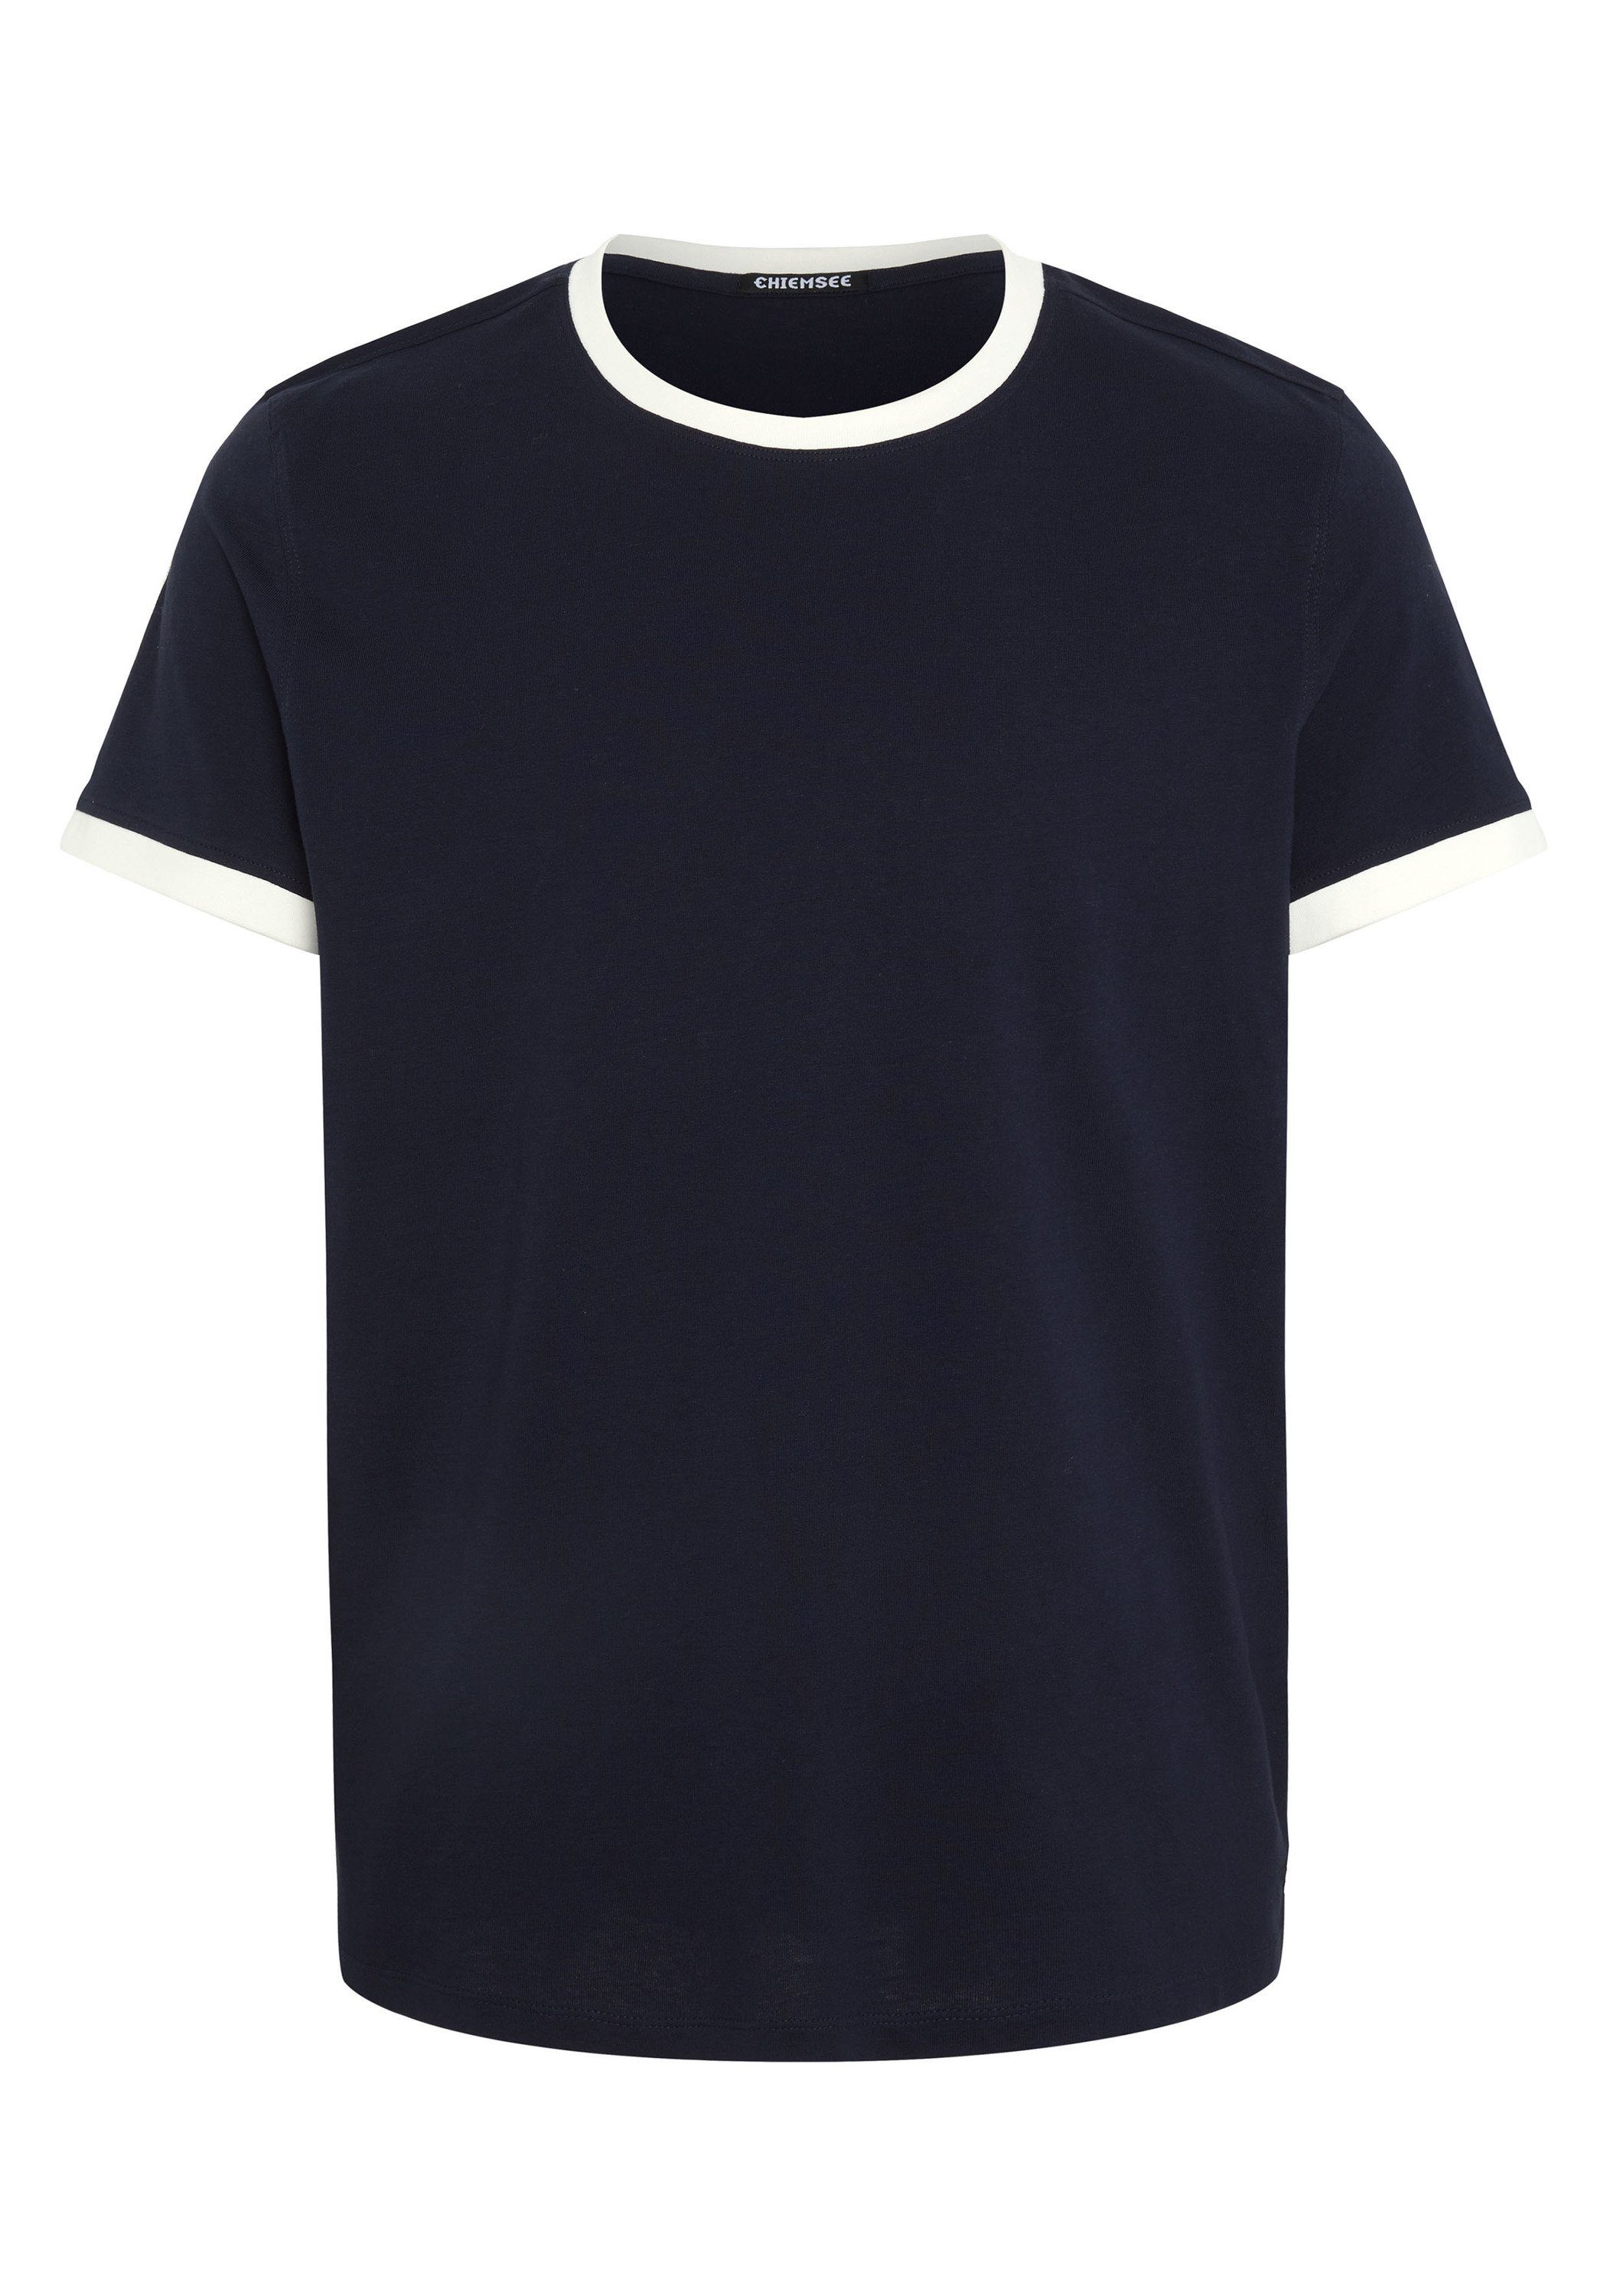 Sky Shirt mit 1 Label-Print Print-Shirt Night 19-3924 Chiemsee Jersey aus